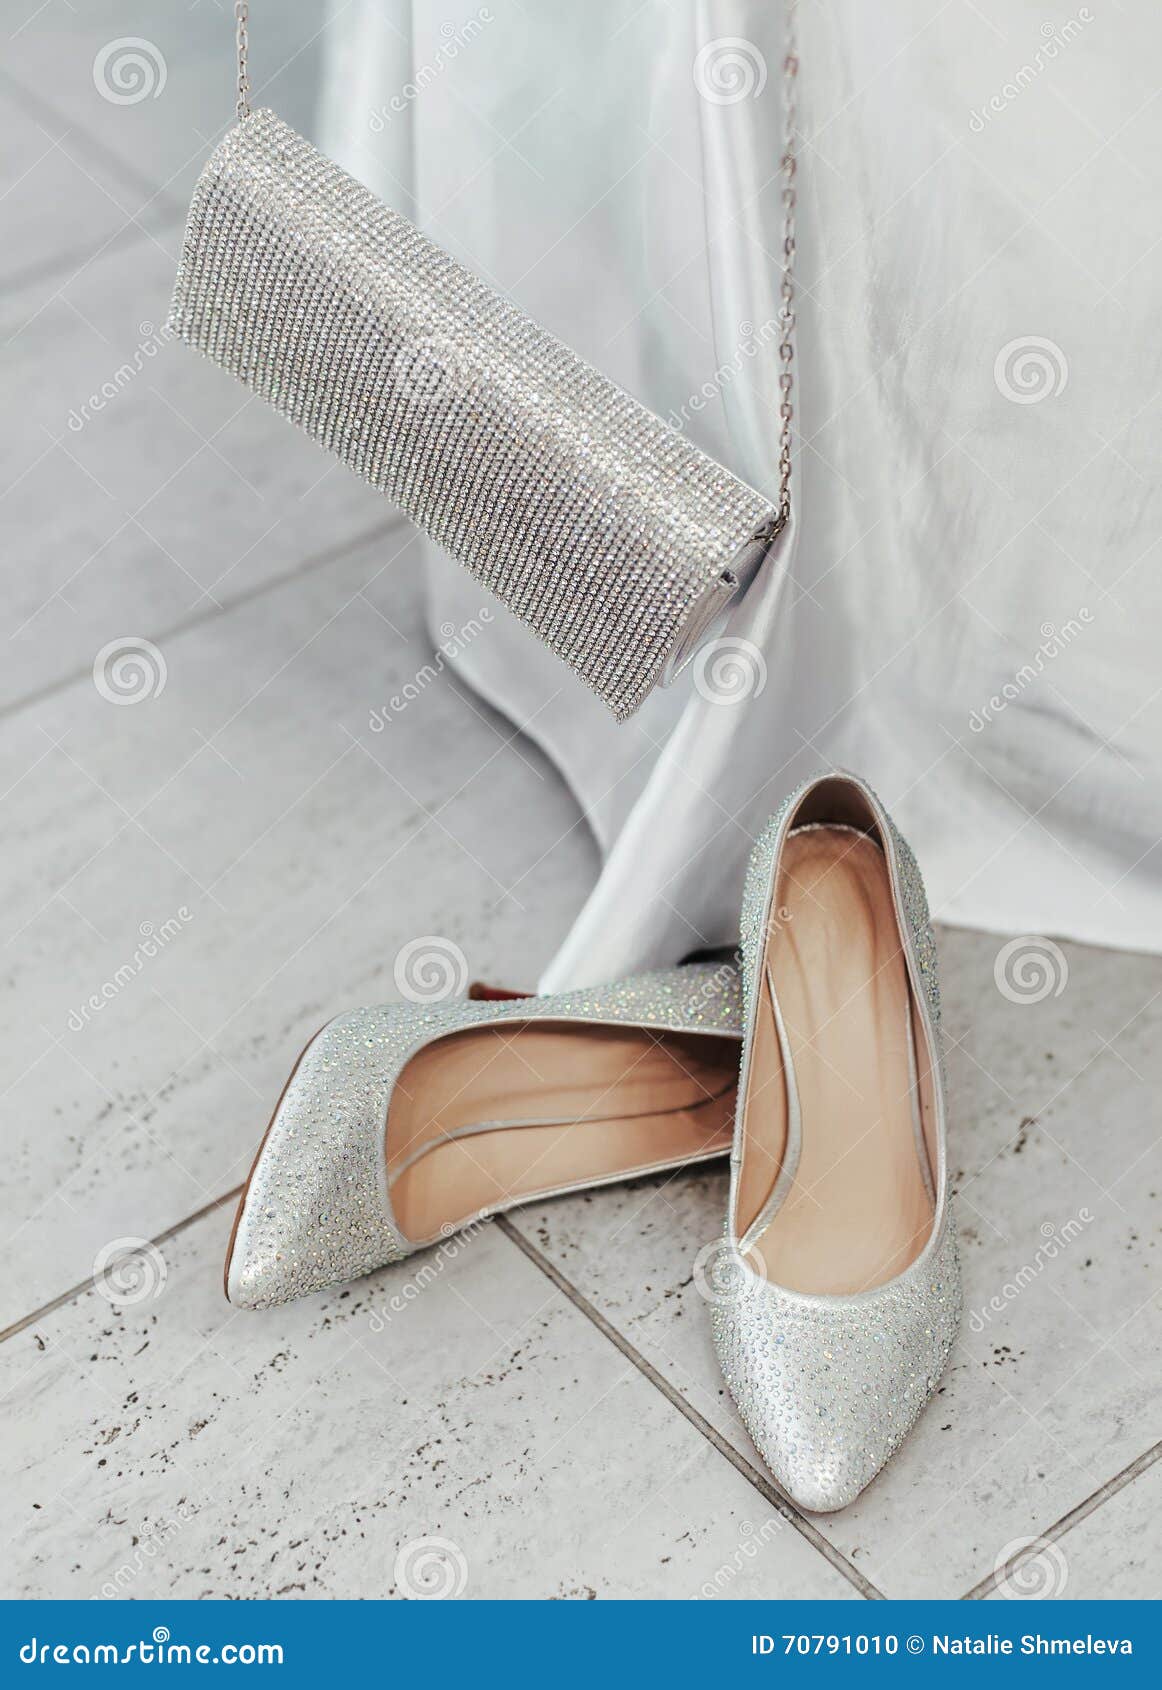 RMUNSK Italian Shoes Matching Bag Set for Wedding Bridal Heels Slingbacks  Luxury Bride Shoe with Purse Sandal and Clutch Purse : Amazon.co.uk: Fashion